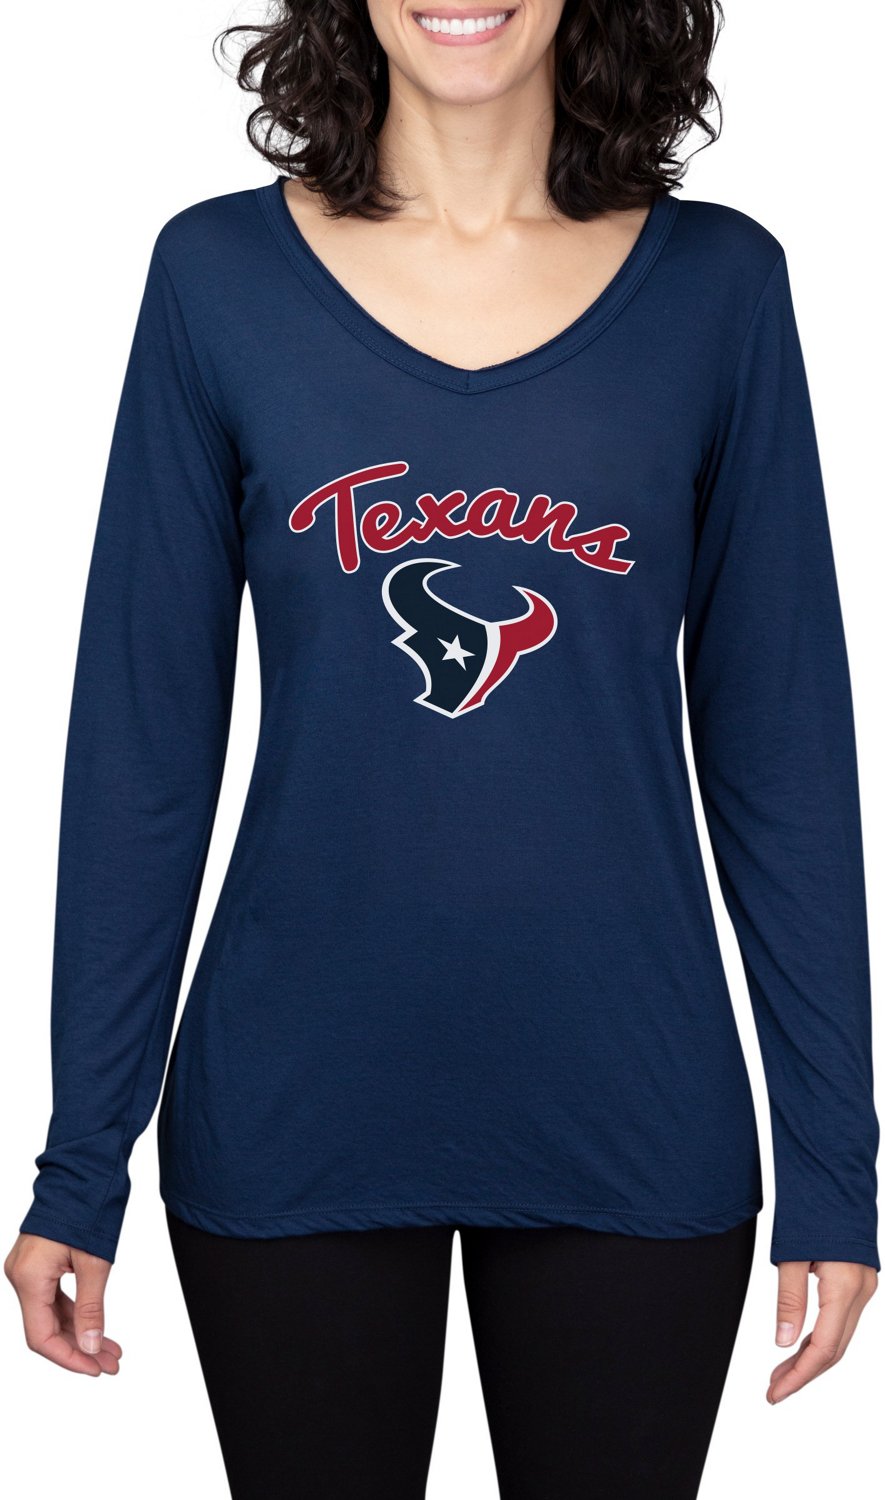 houston texans women's shirts